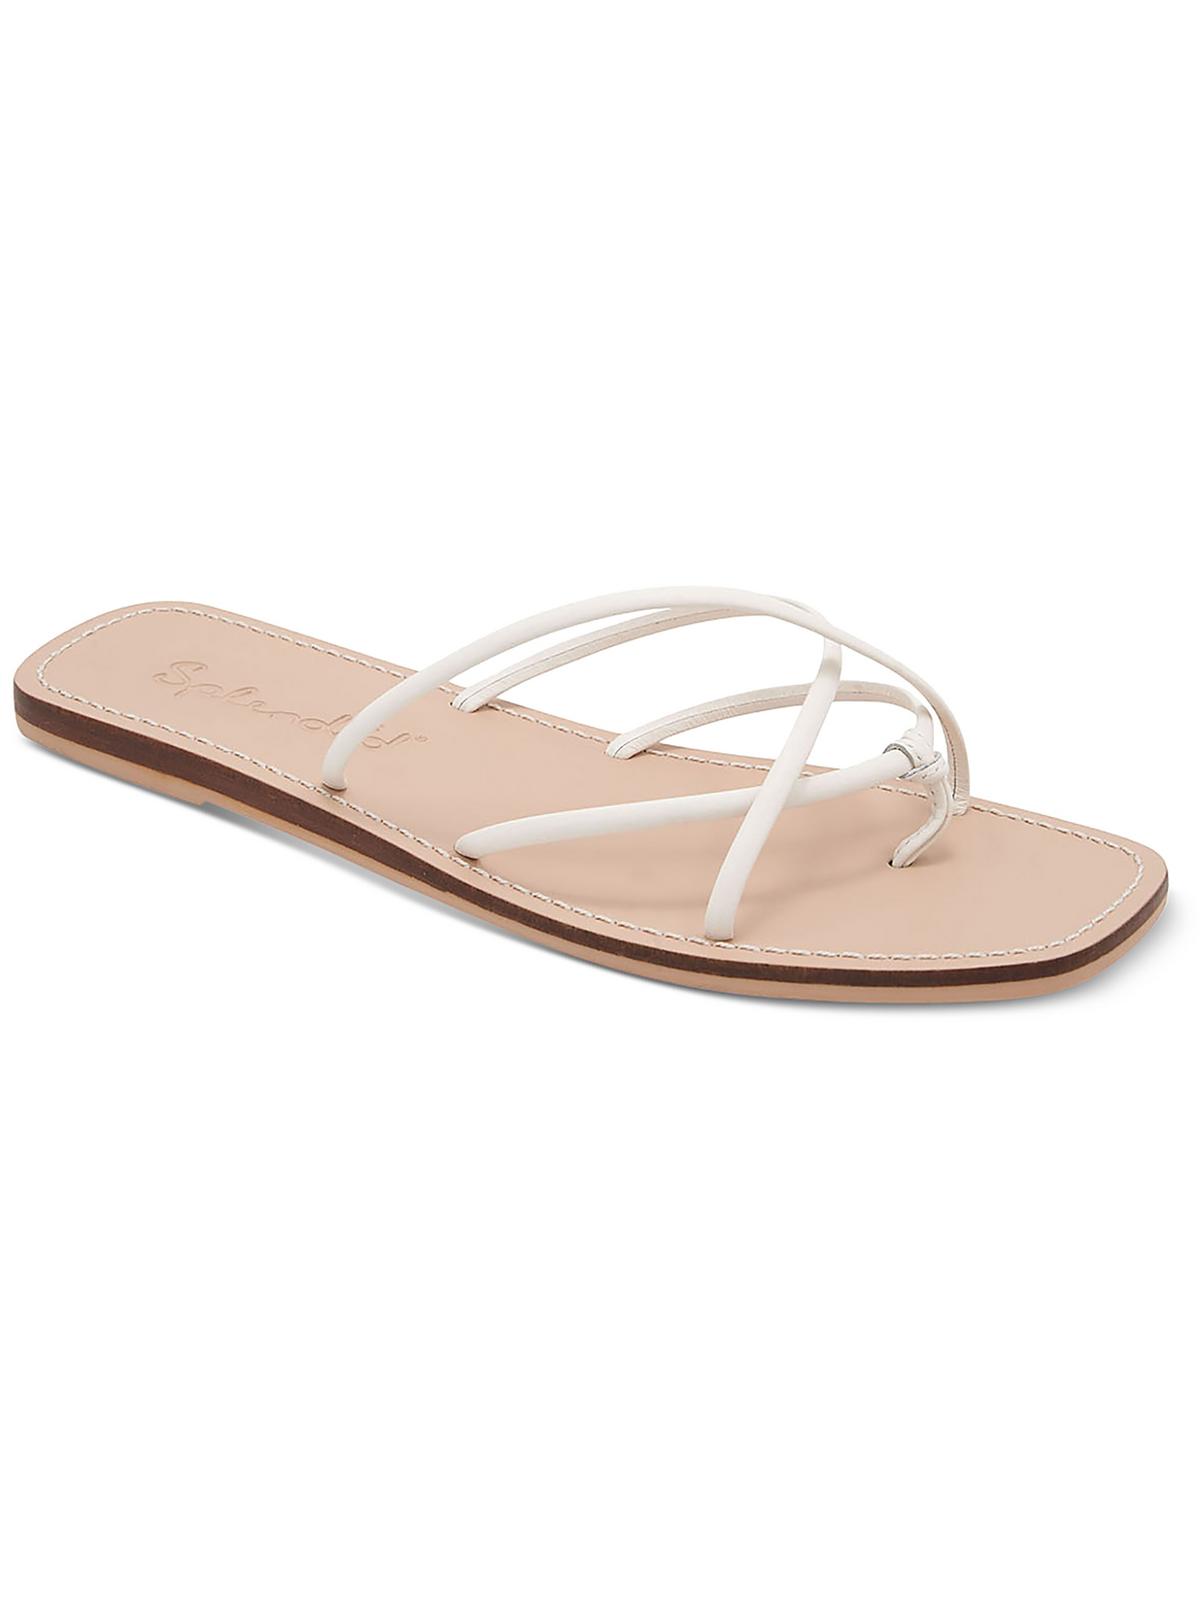 Splendid Womens Leather Flat Thong Sandals In White